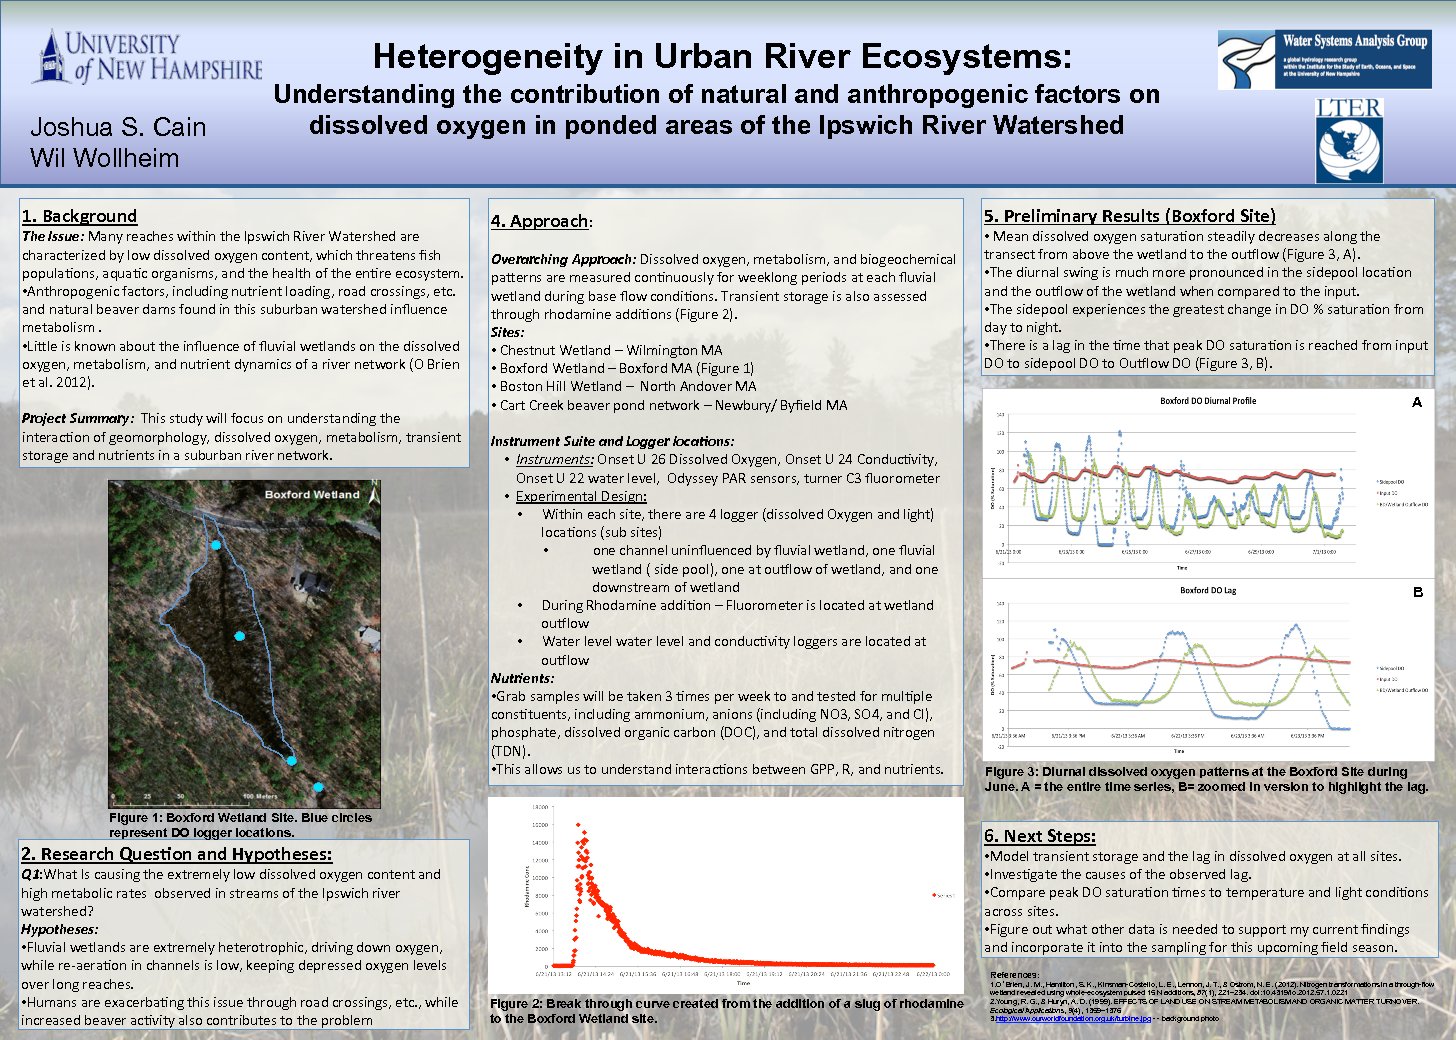 Heterogeneity In Urban River Systems by jsccain